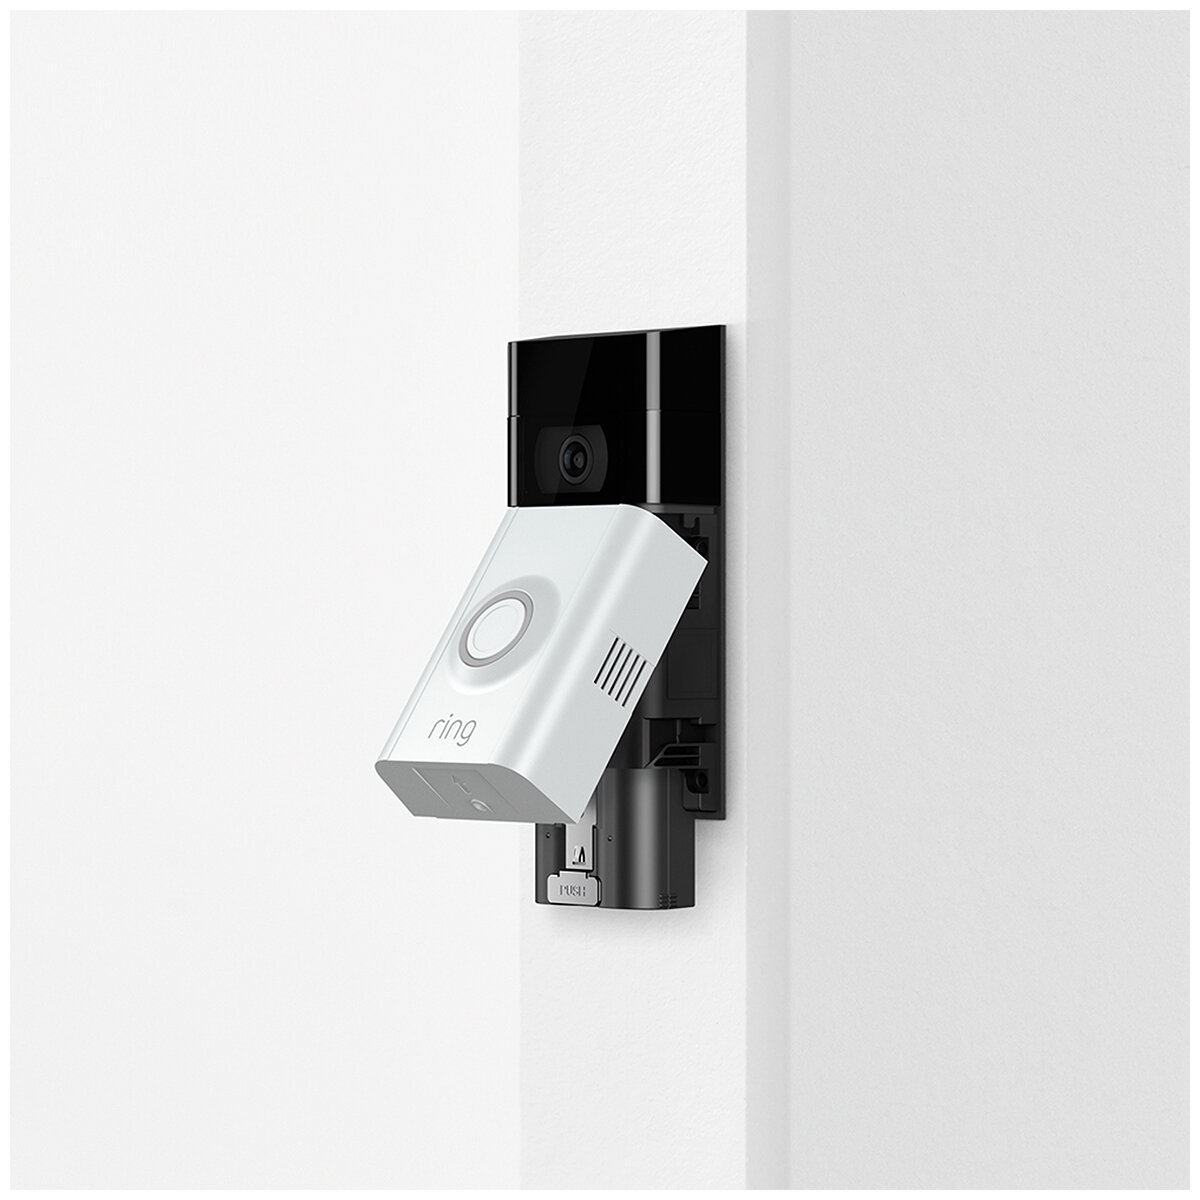 Ring Battery Doorbell Plus \u0026 Chime Pro防犯カメラ